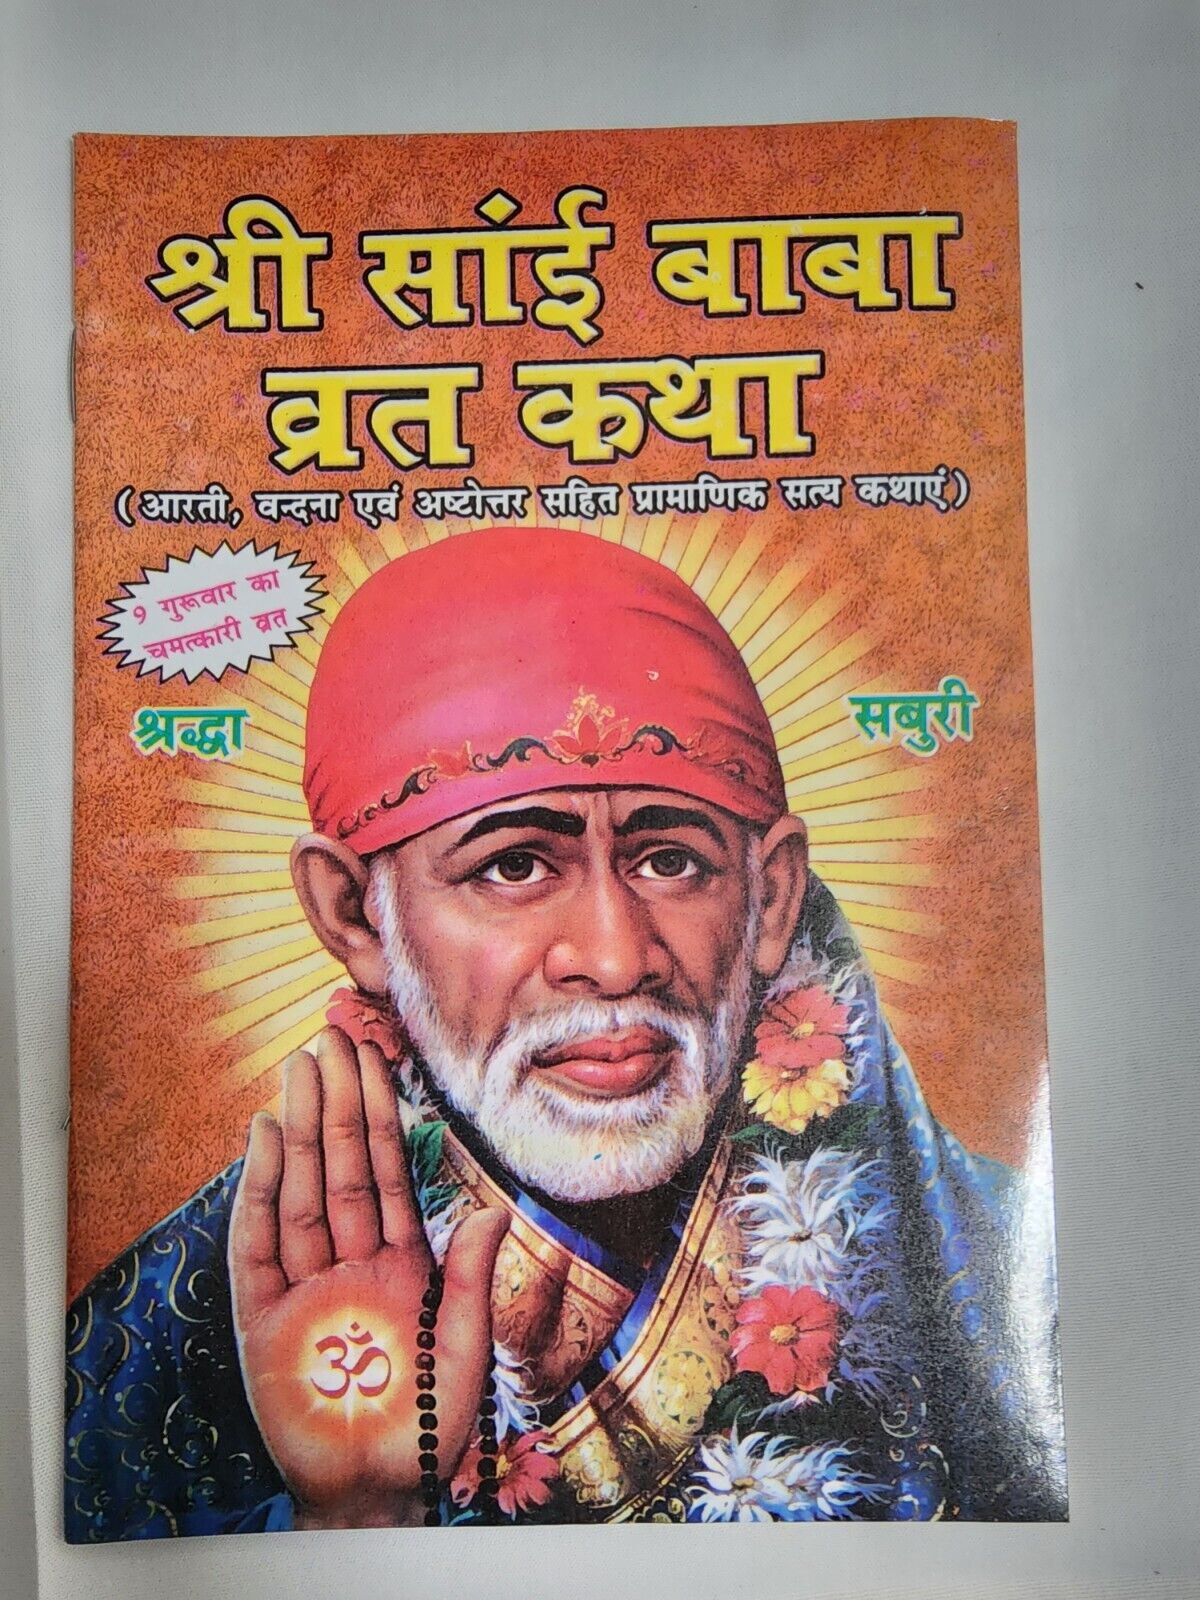 5x Sai baba Vrat Katha book usa Seller Fast shipping 